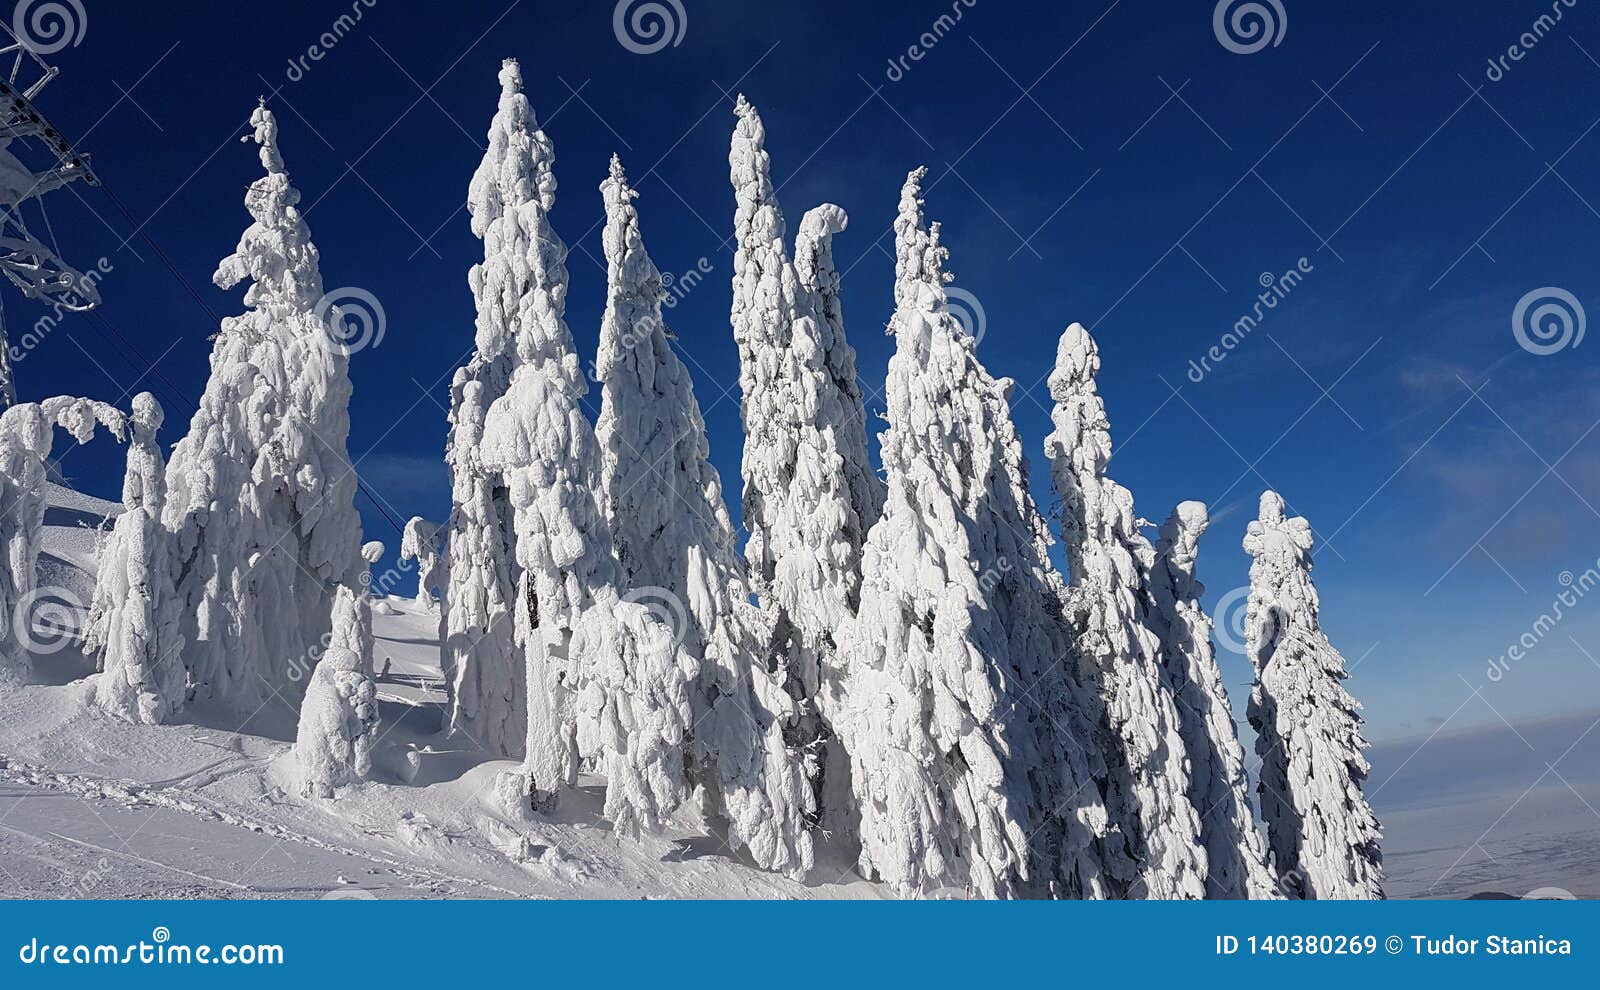 frozen fir trees in charpatians montains